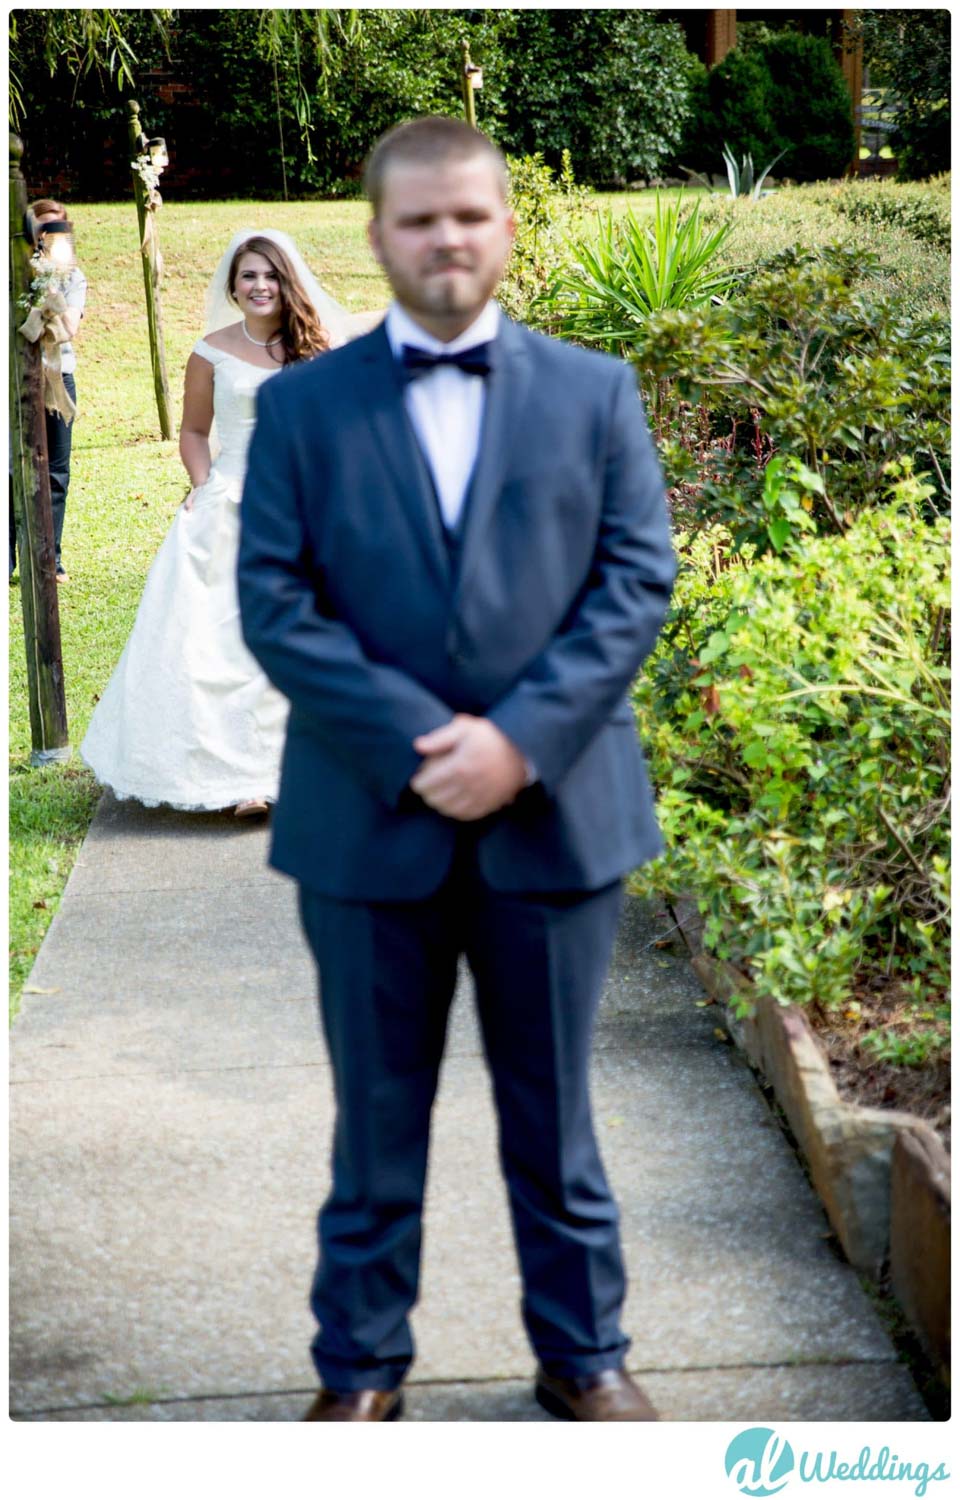 Alabama,First Look,Hargis wedding chappel,wedding,